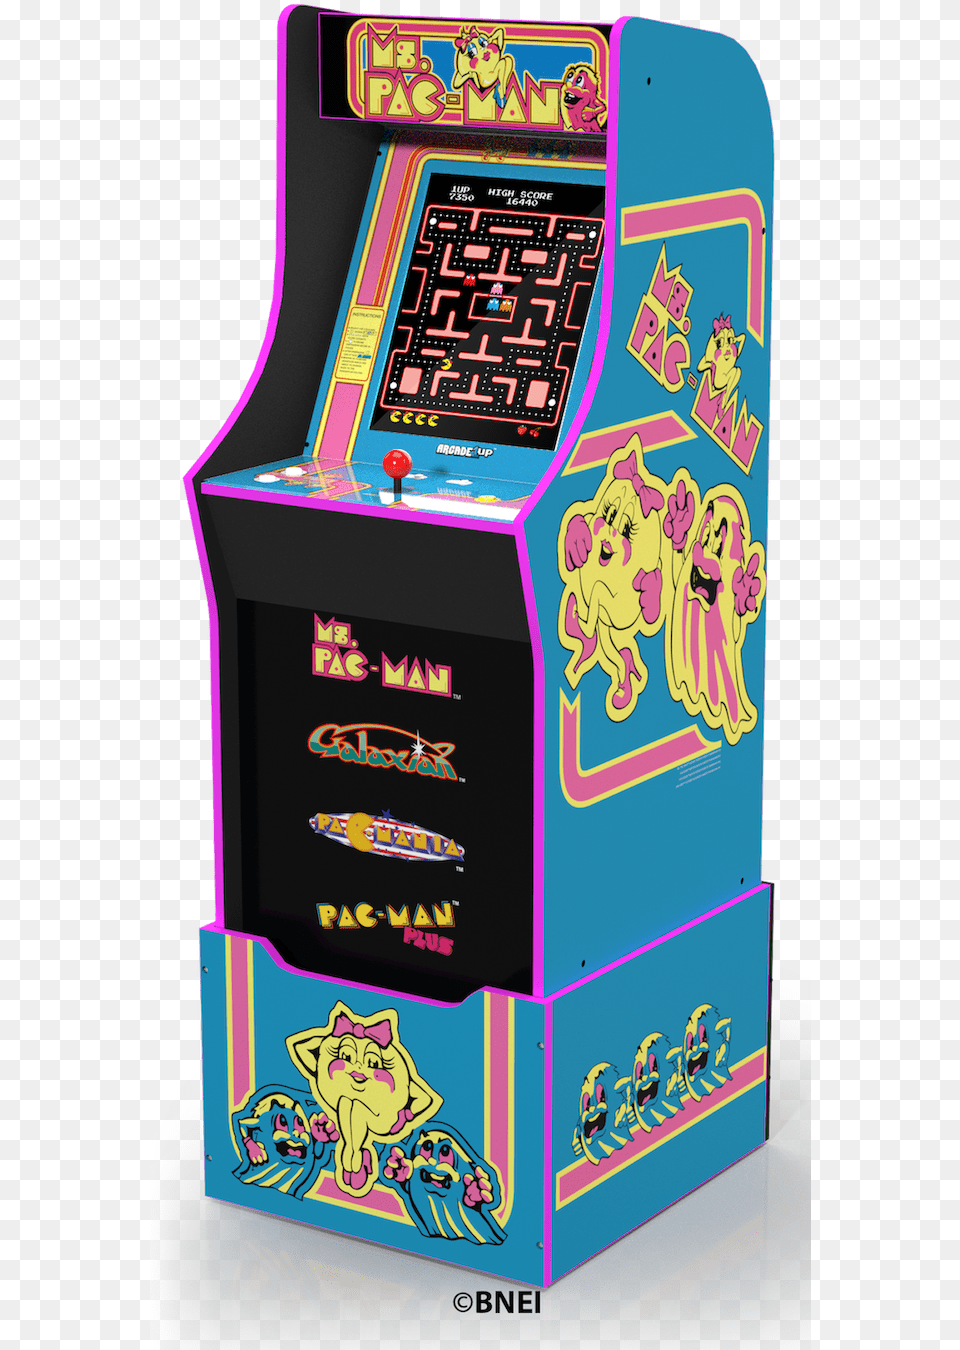 Ms Pacman Arcade Machine With Riser Arcade1up Walmartcom Ms Pac Man Arcade1up, Person, Qr Code, Baby, Arcade Game Machine Png